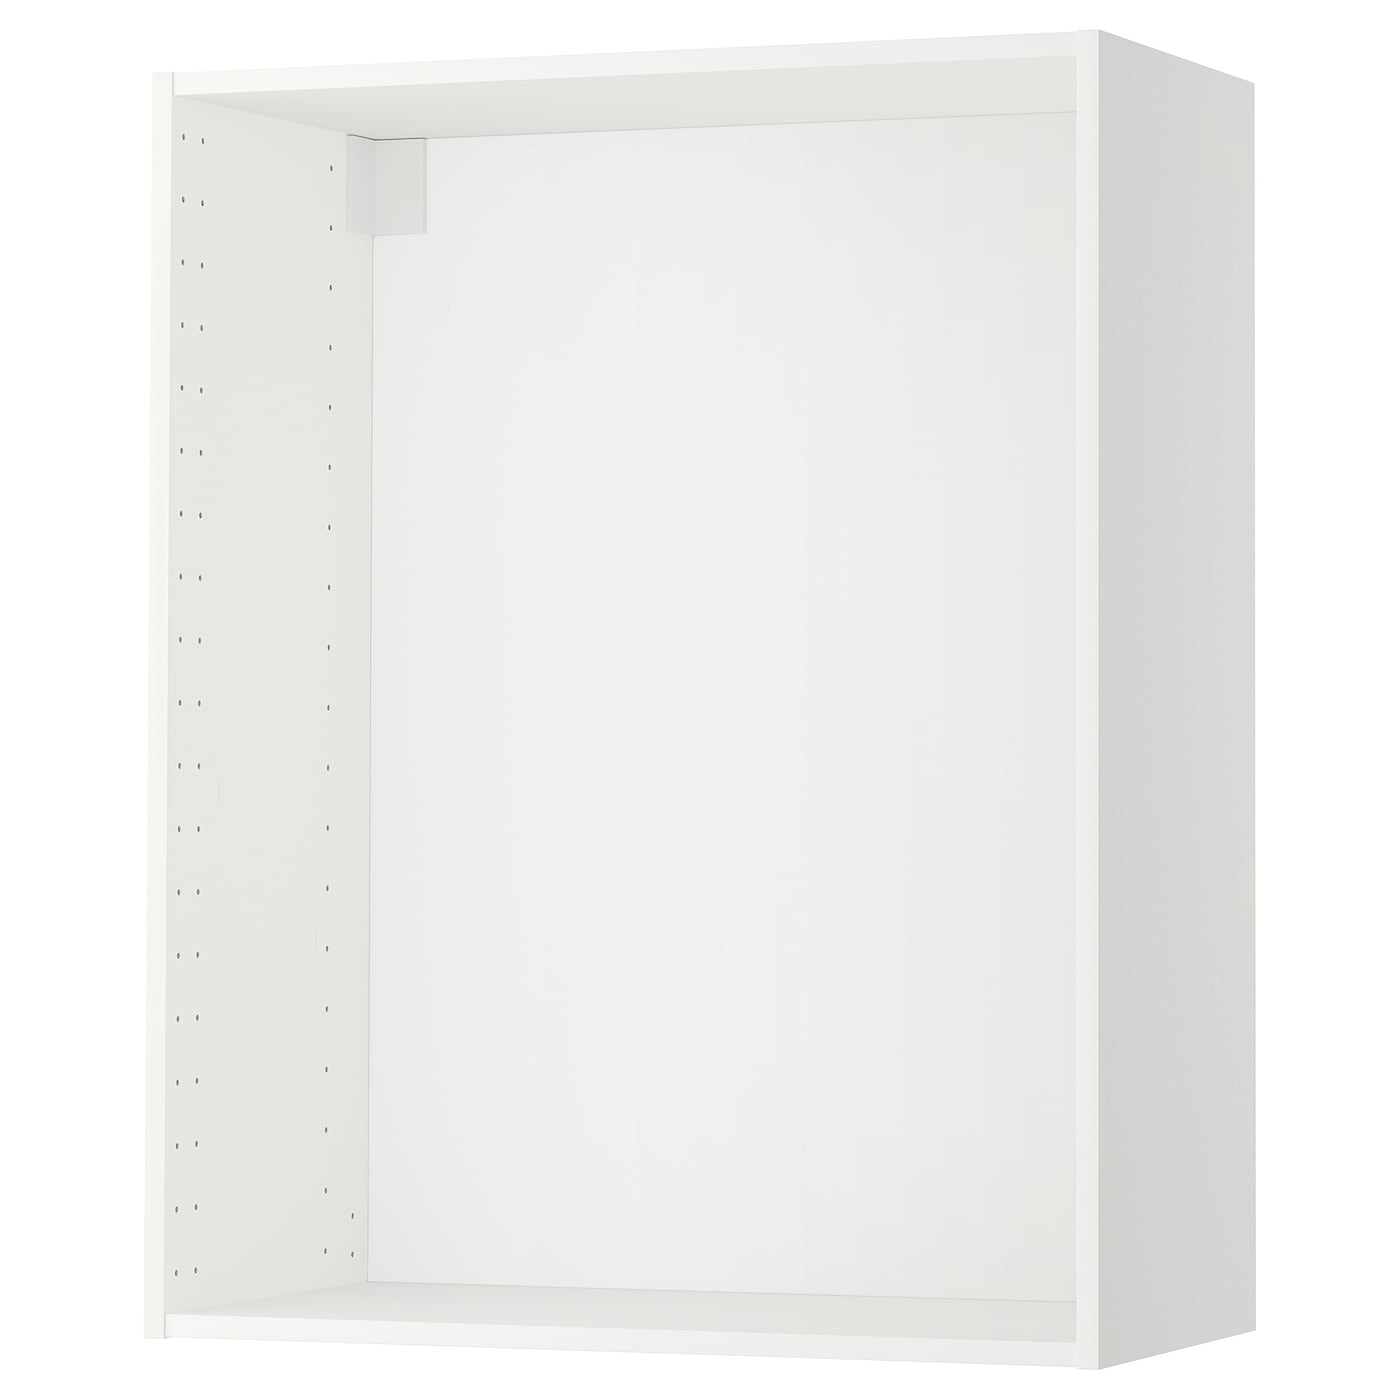 Каркас - METOD IKEA/МЕТОД ИКЕА, 100х80 см, белый